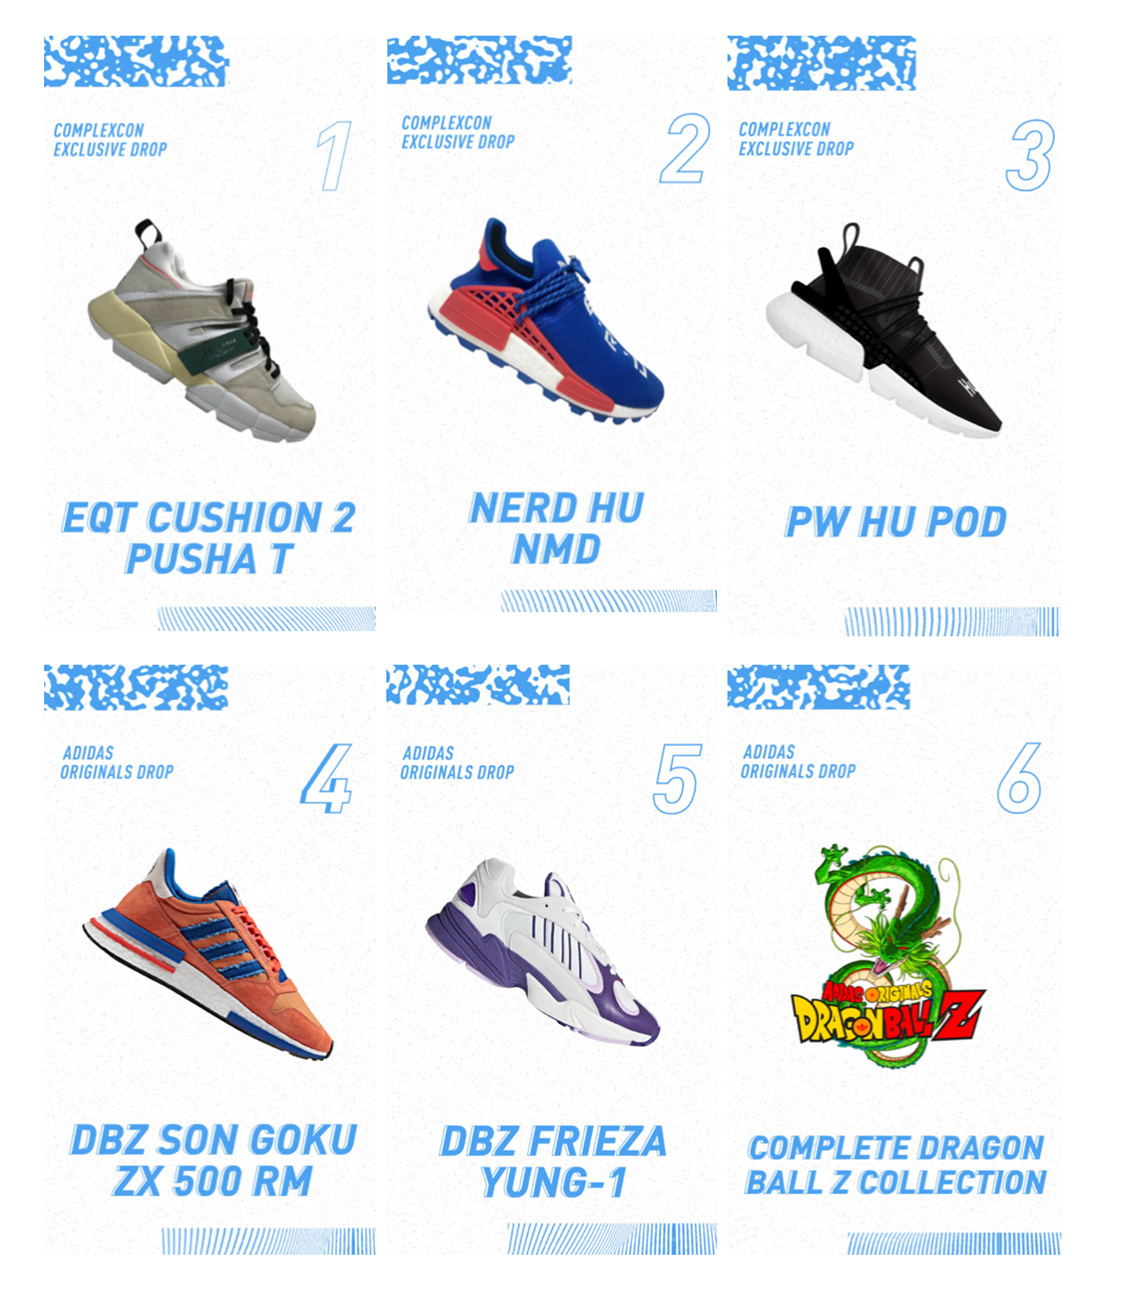 Adidas Complexcon 2018 Sneaker Releases 1